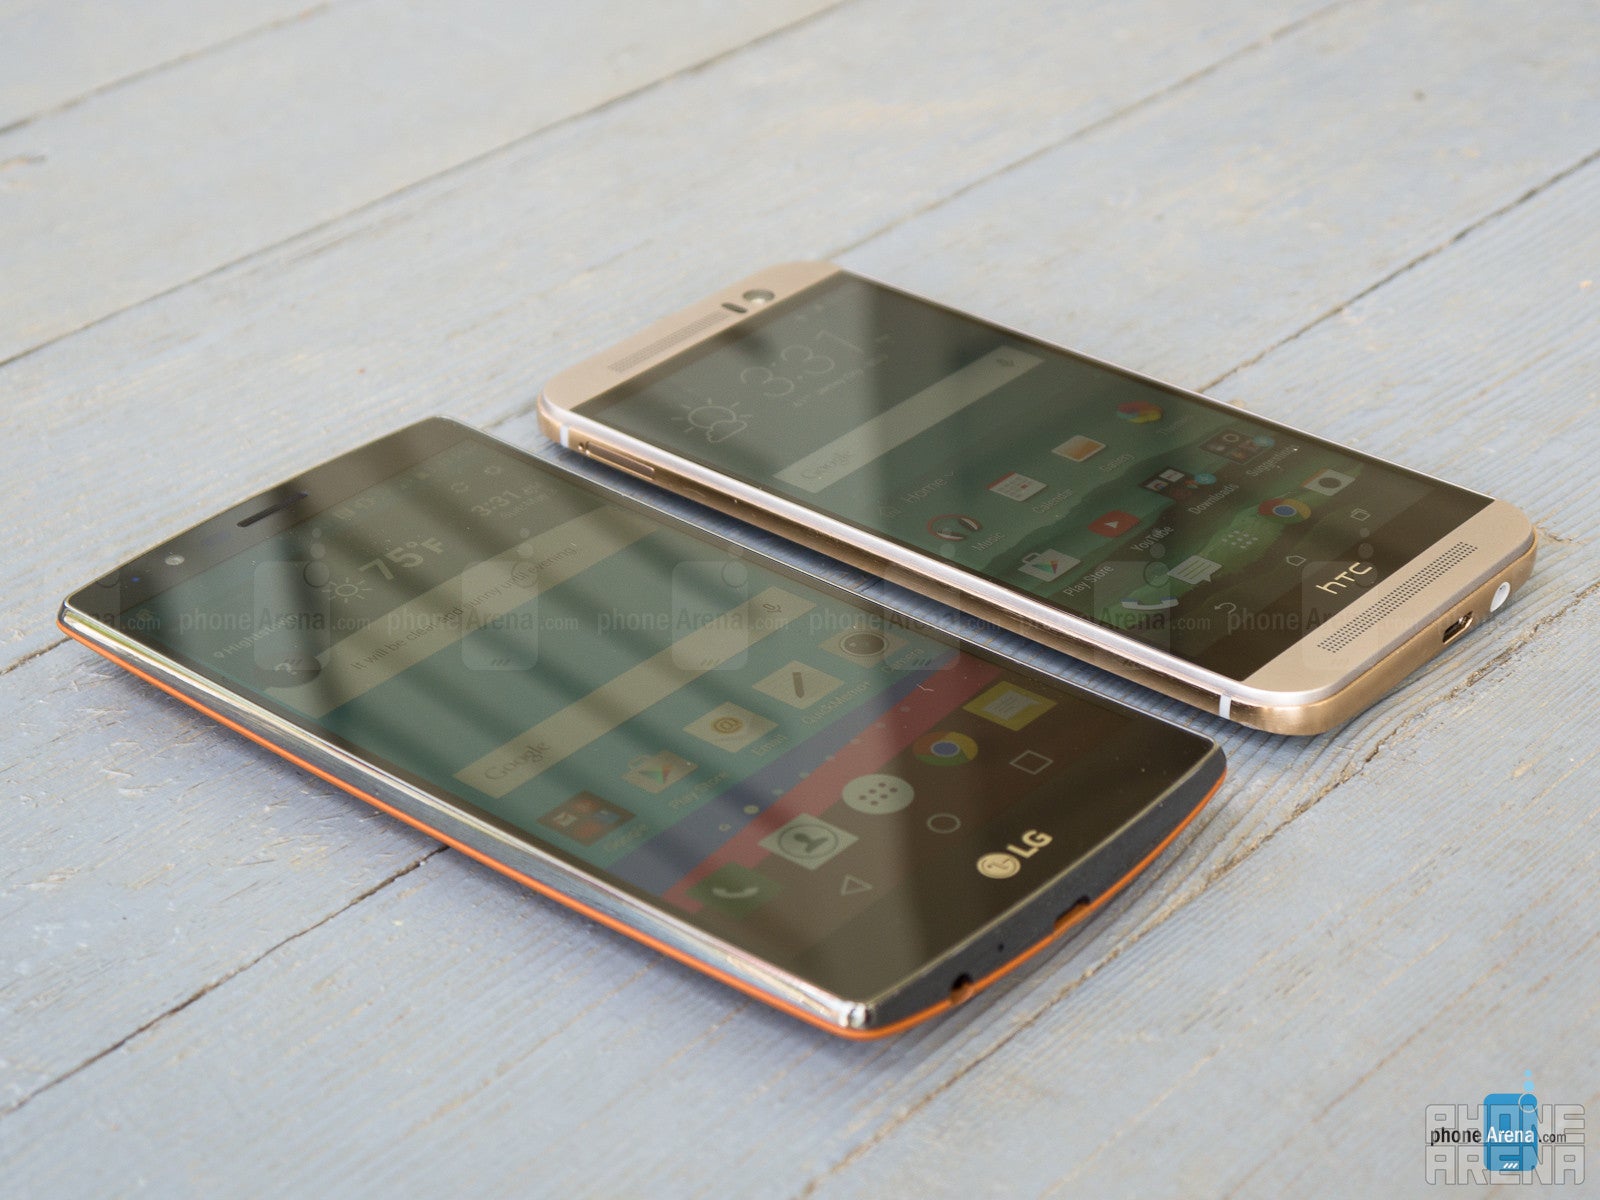 LG G4 vs HTC One M9